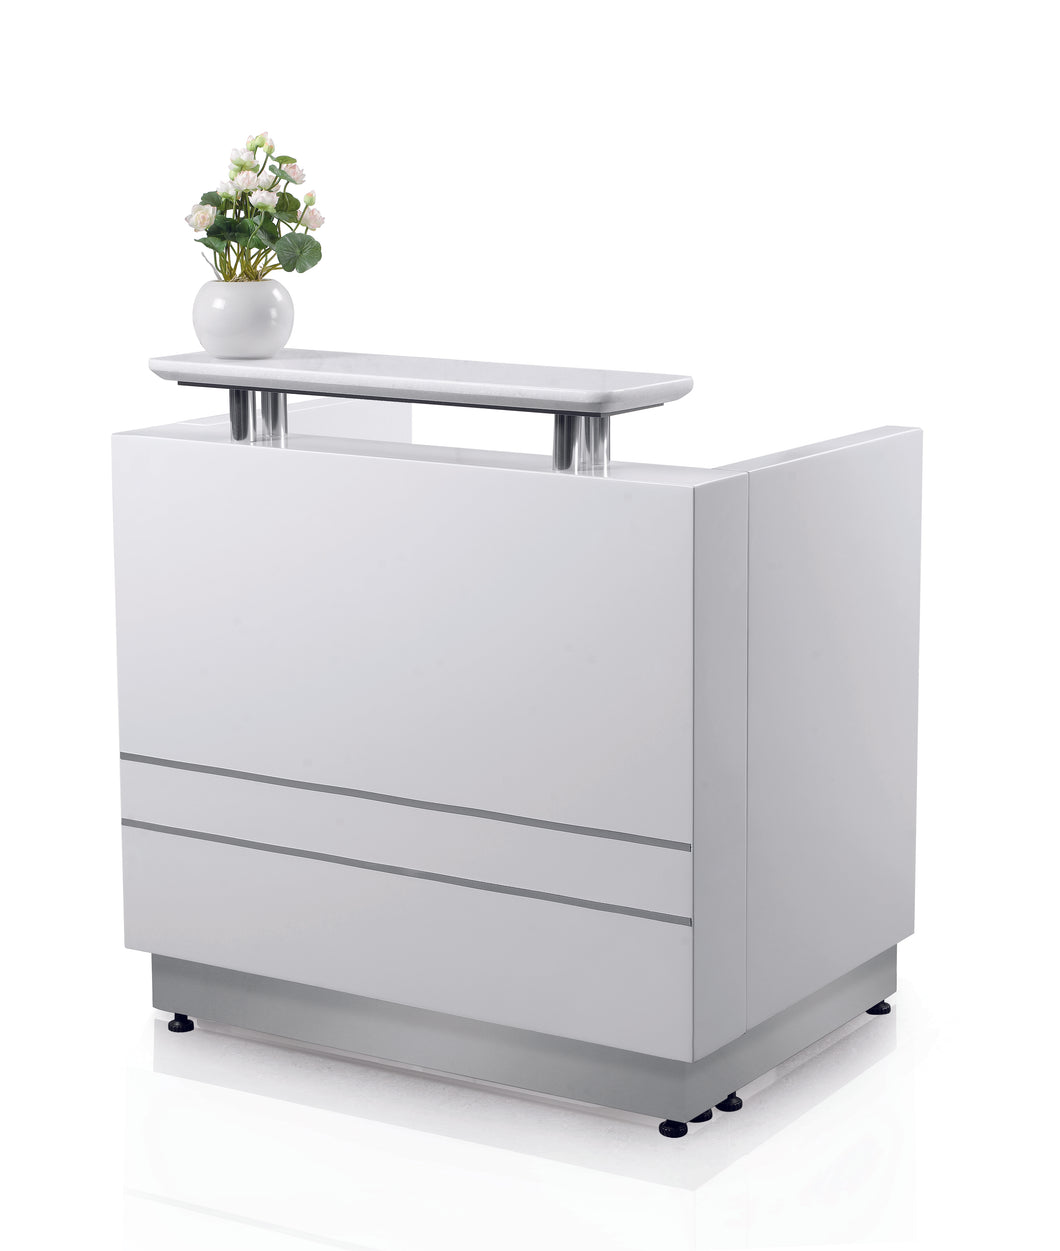 Reception Desk Model R007 (Please Call For Purchase)